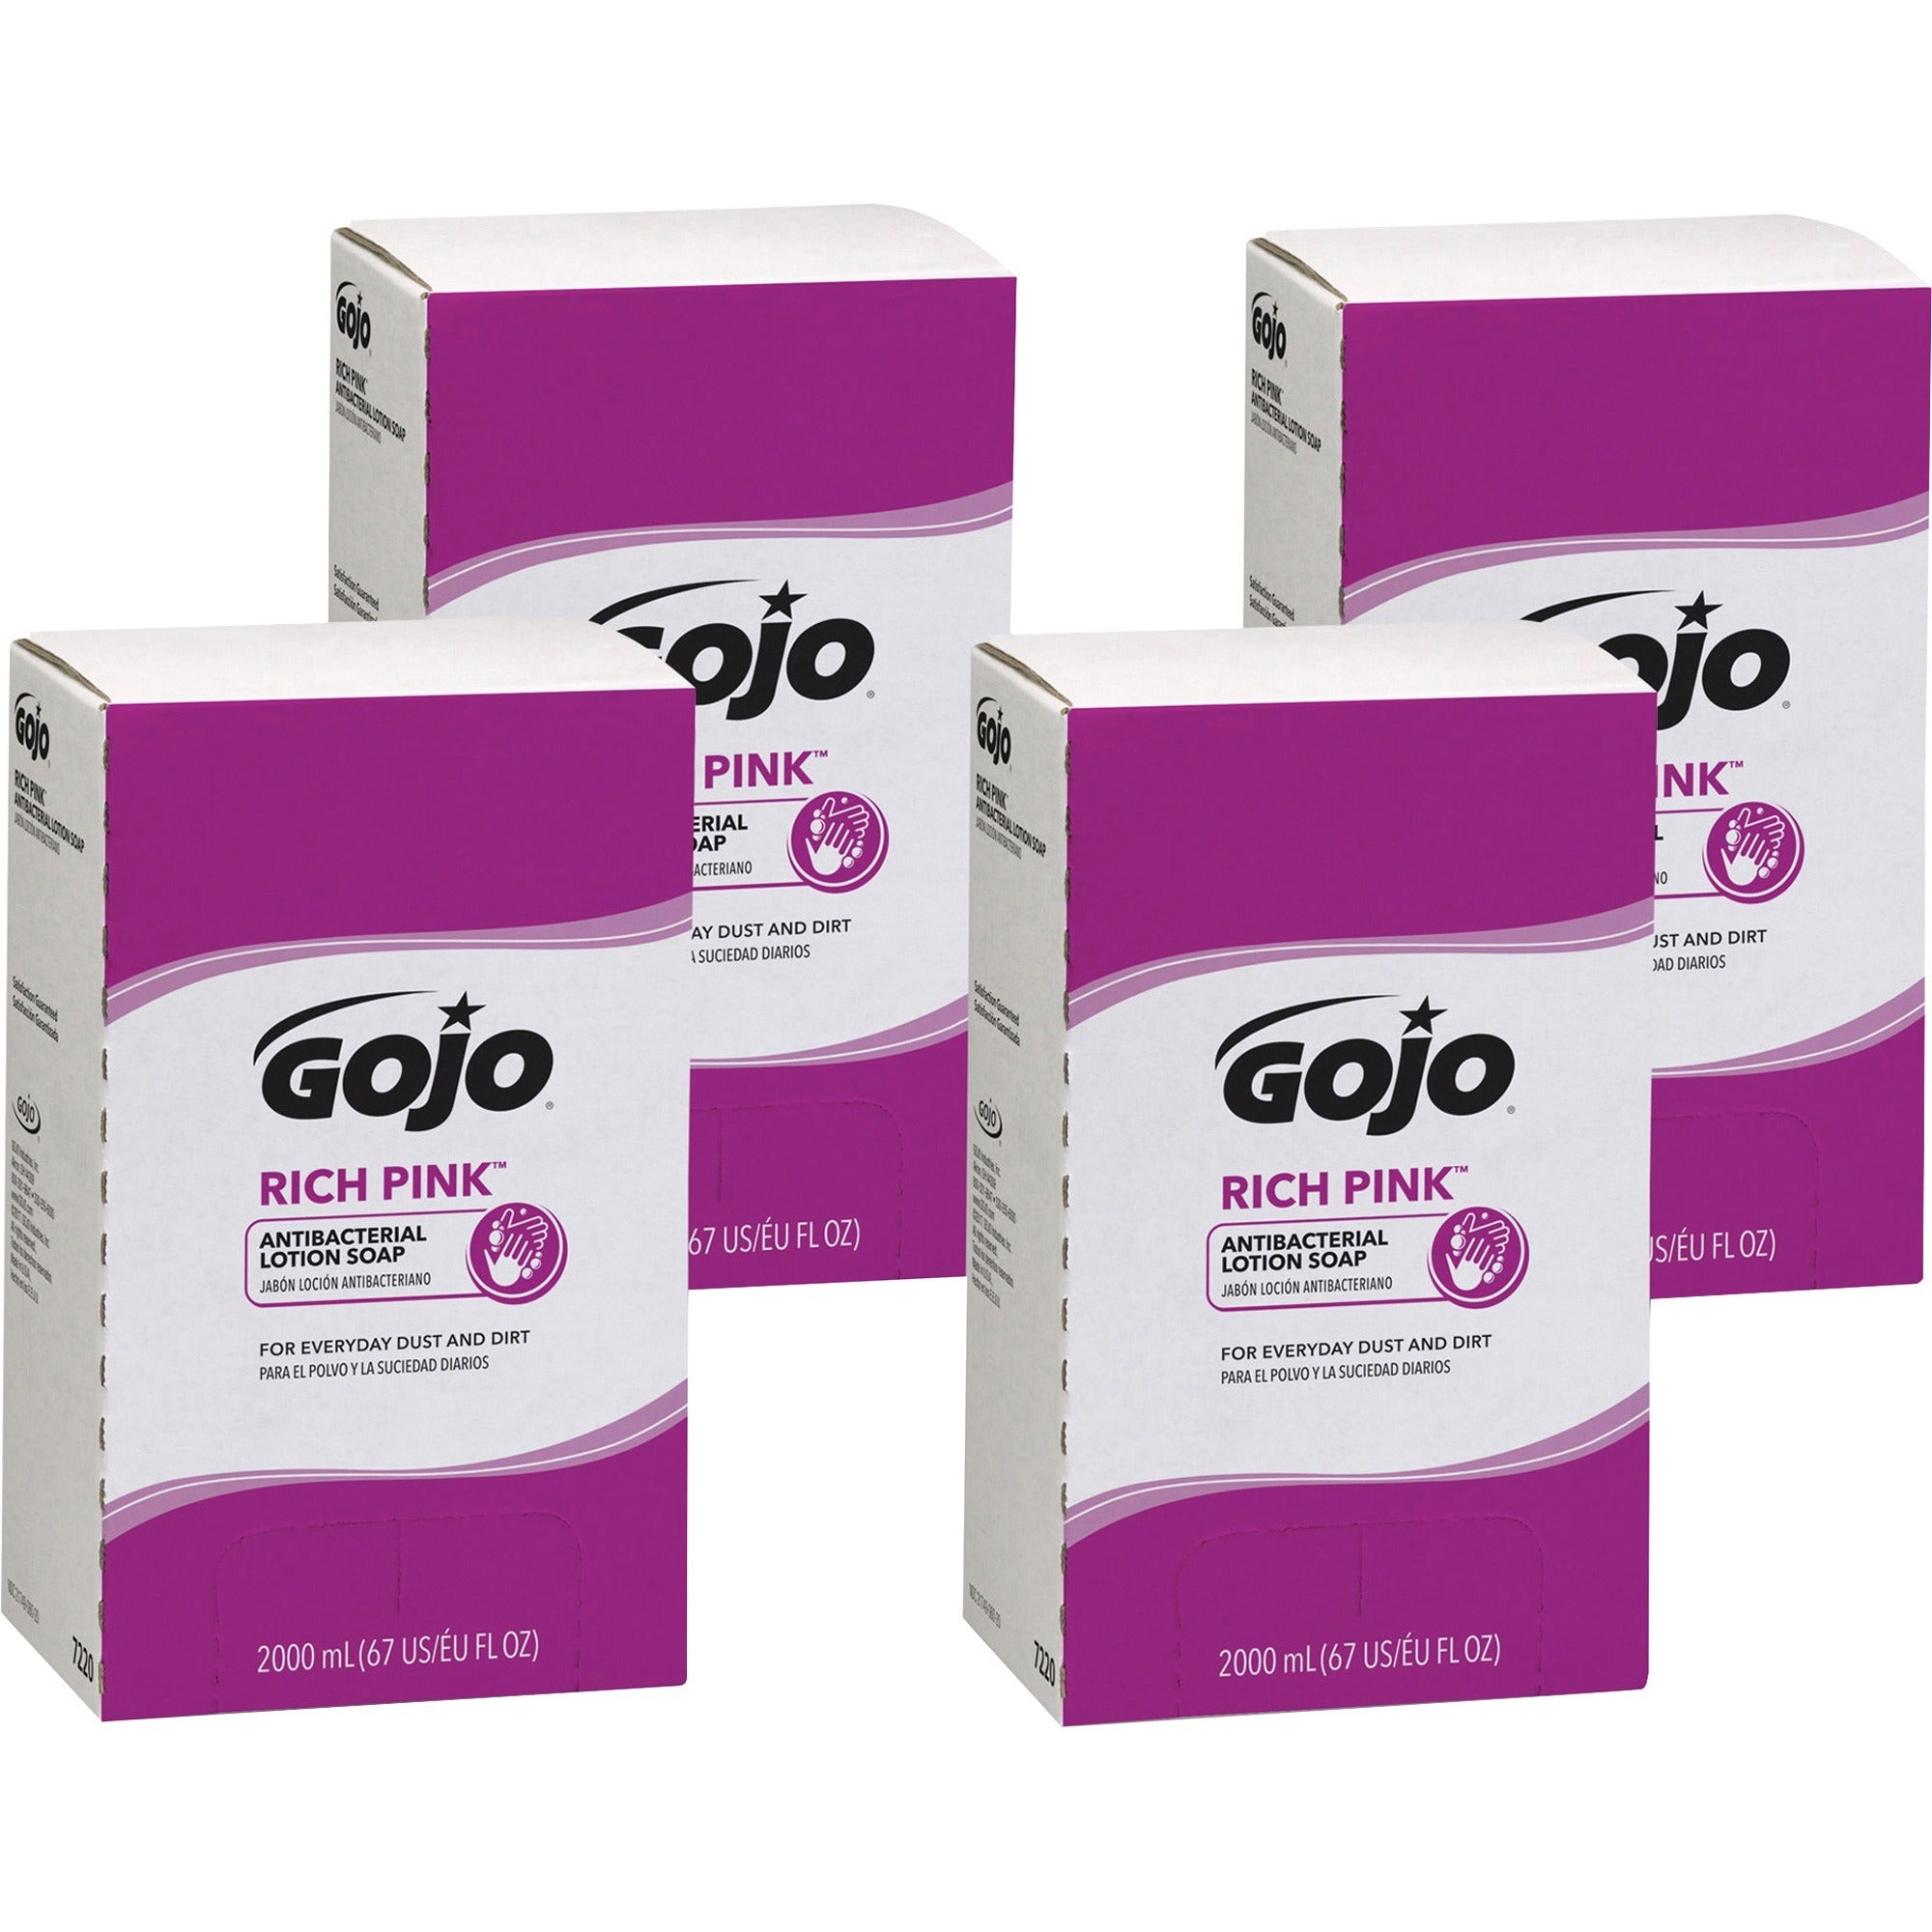 Gojo Rich Pink Antibacterial Lotion Soap Refill - 67.6 fl oz (2 L) - Soil Remover - Antibacterial - 4 / Carton - 